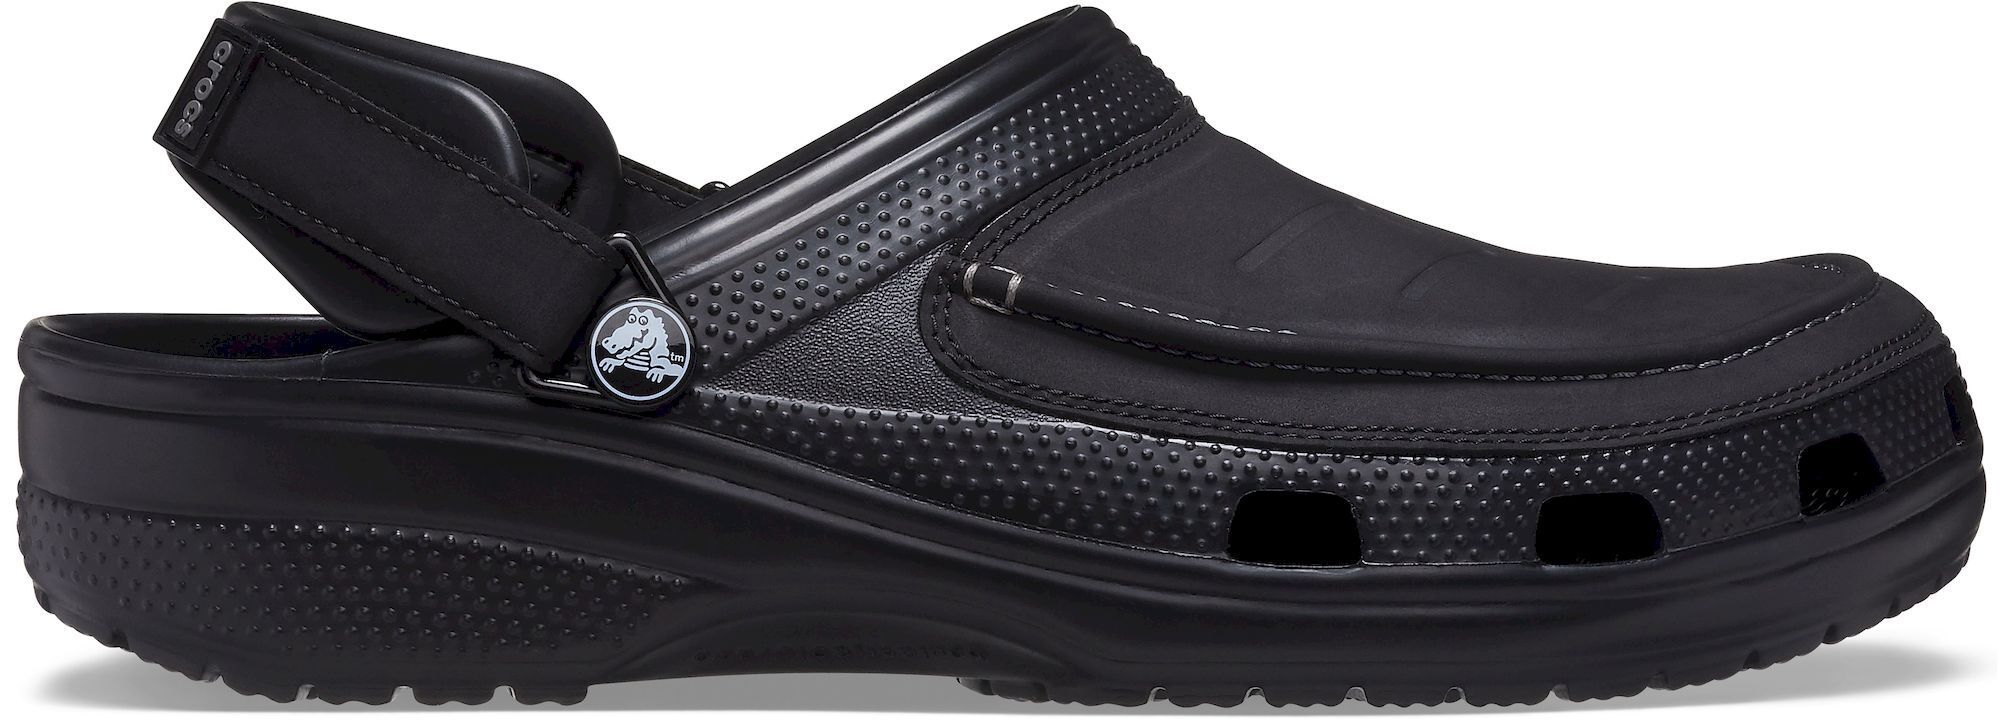 Crocs Yukon Vista II Clog M - Sandals - Men's